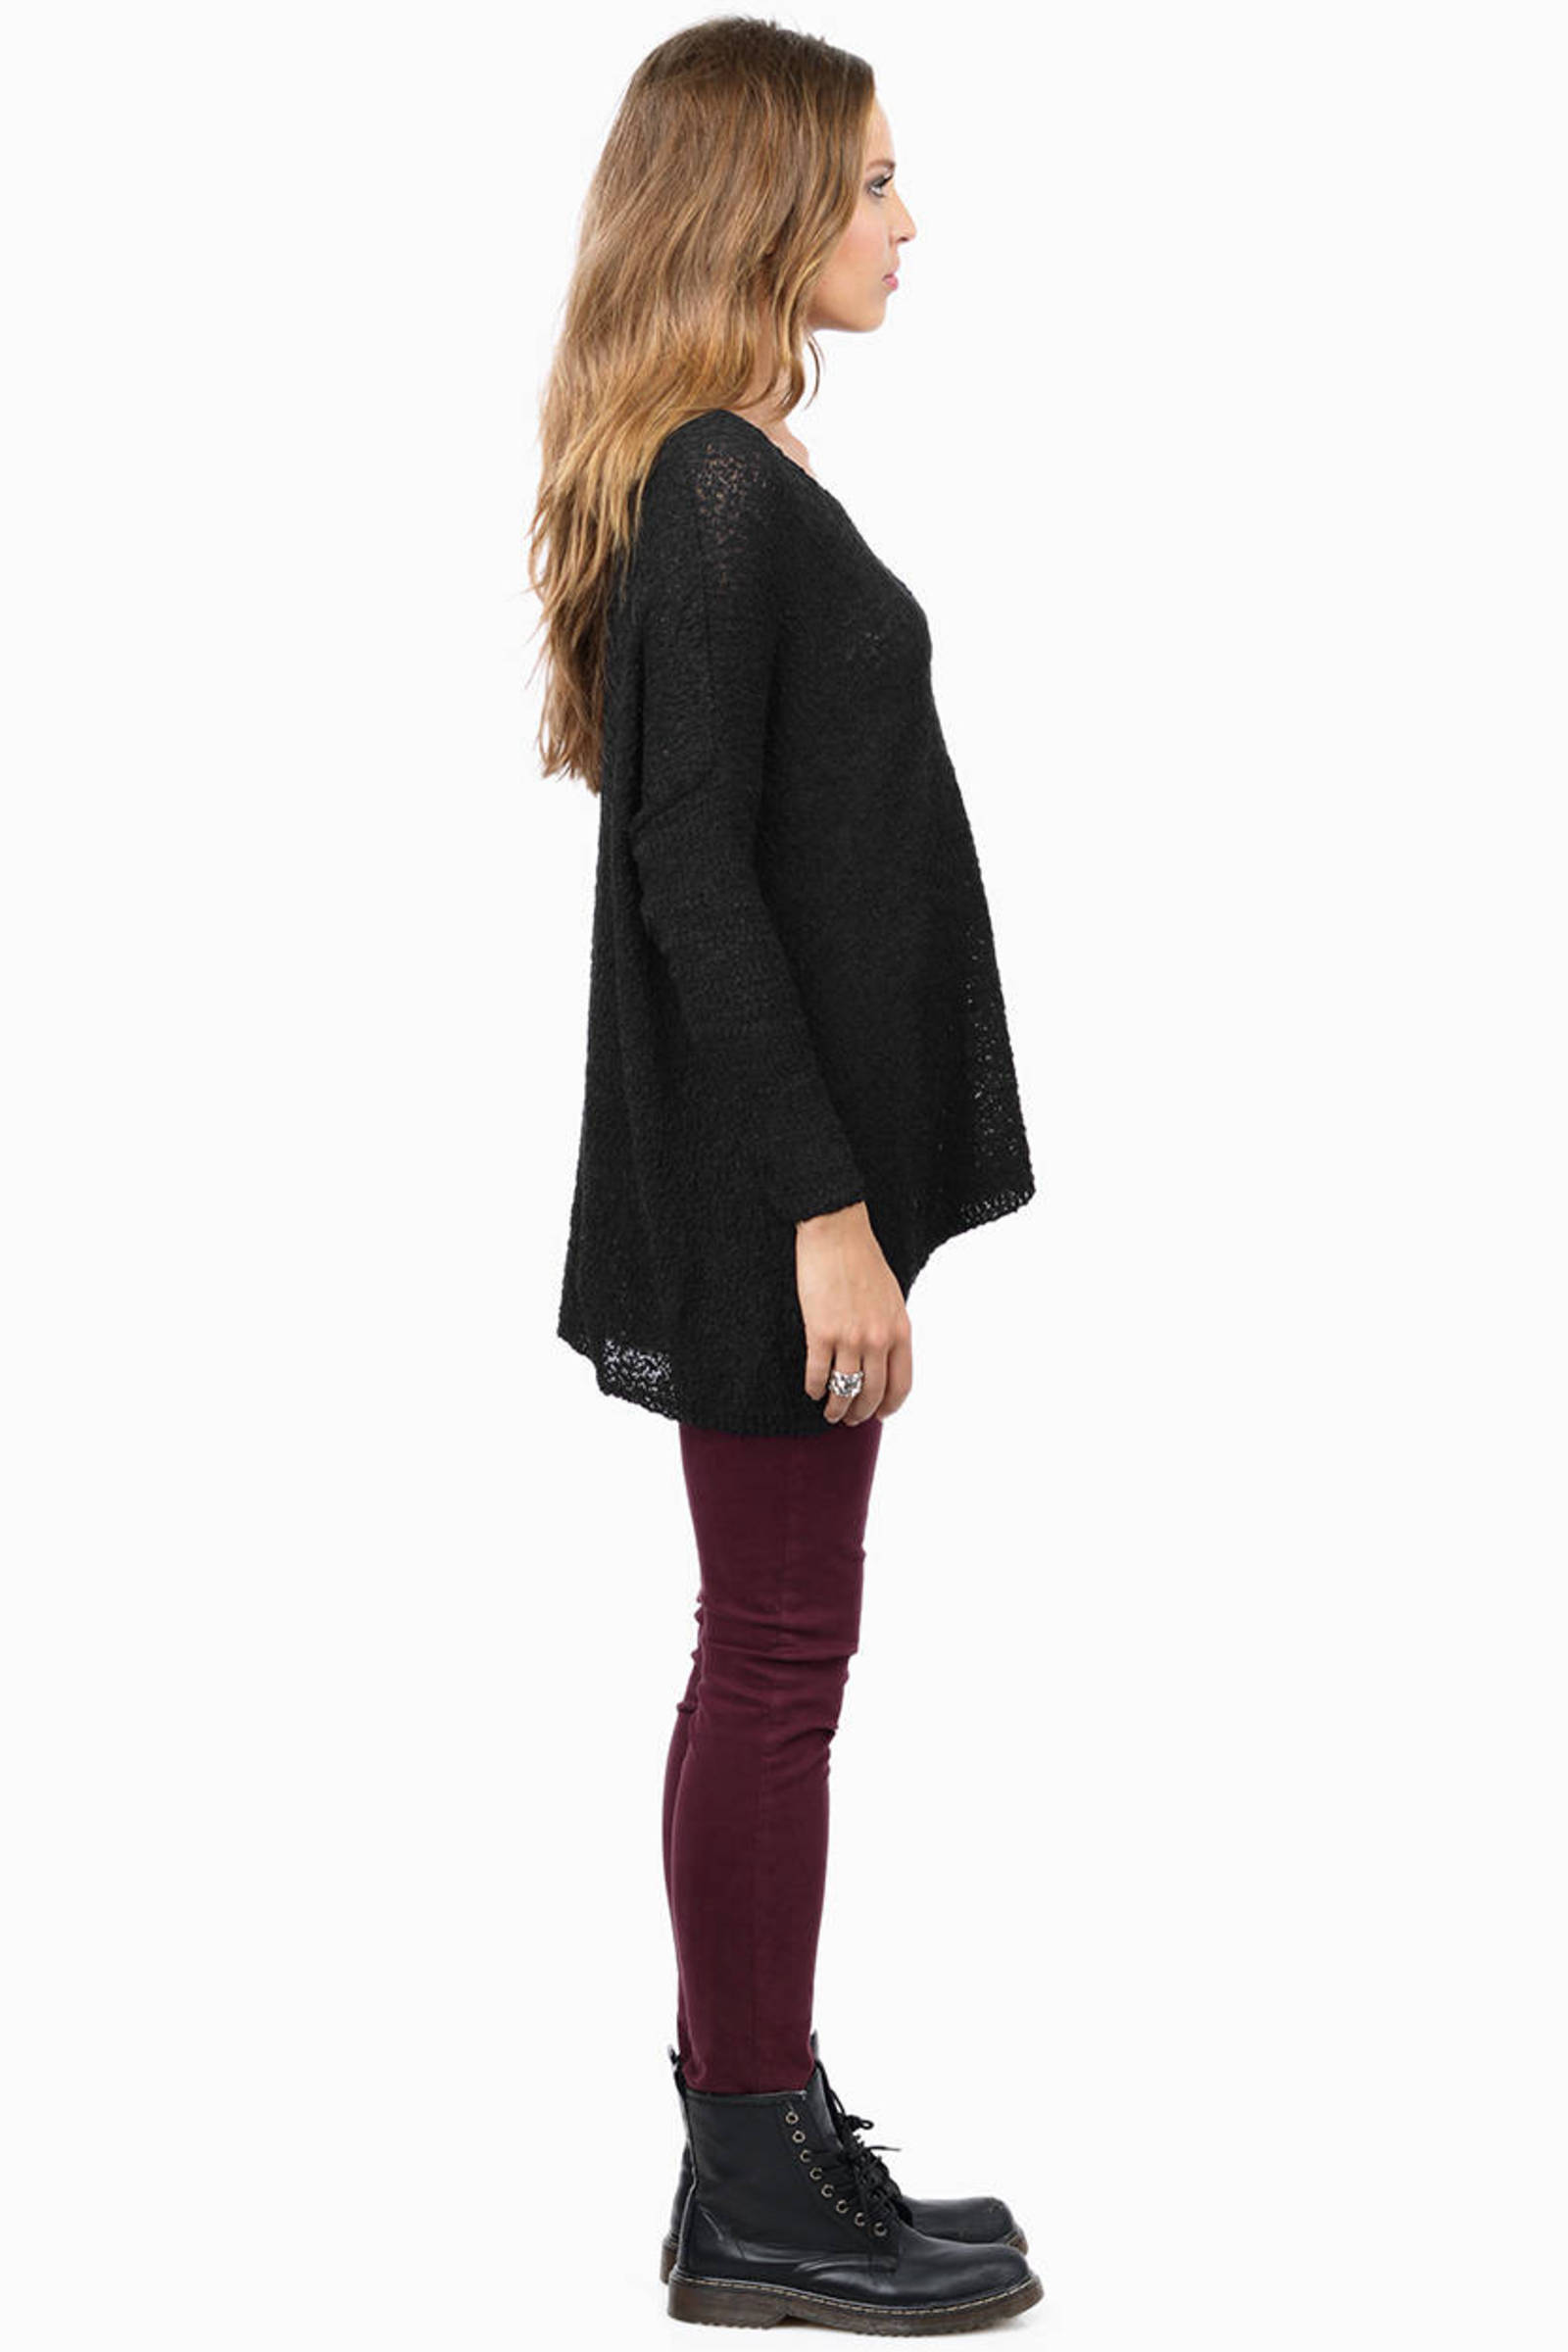 Lay Low Sweater in Black - $19 | Tobi US